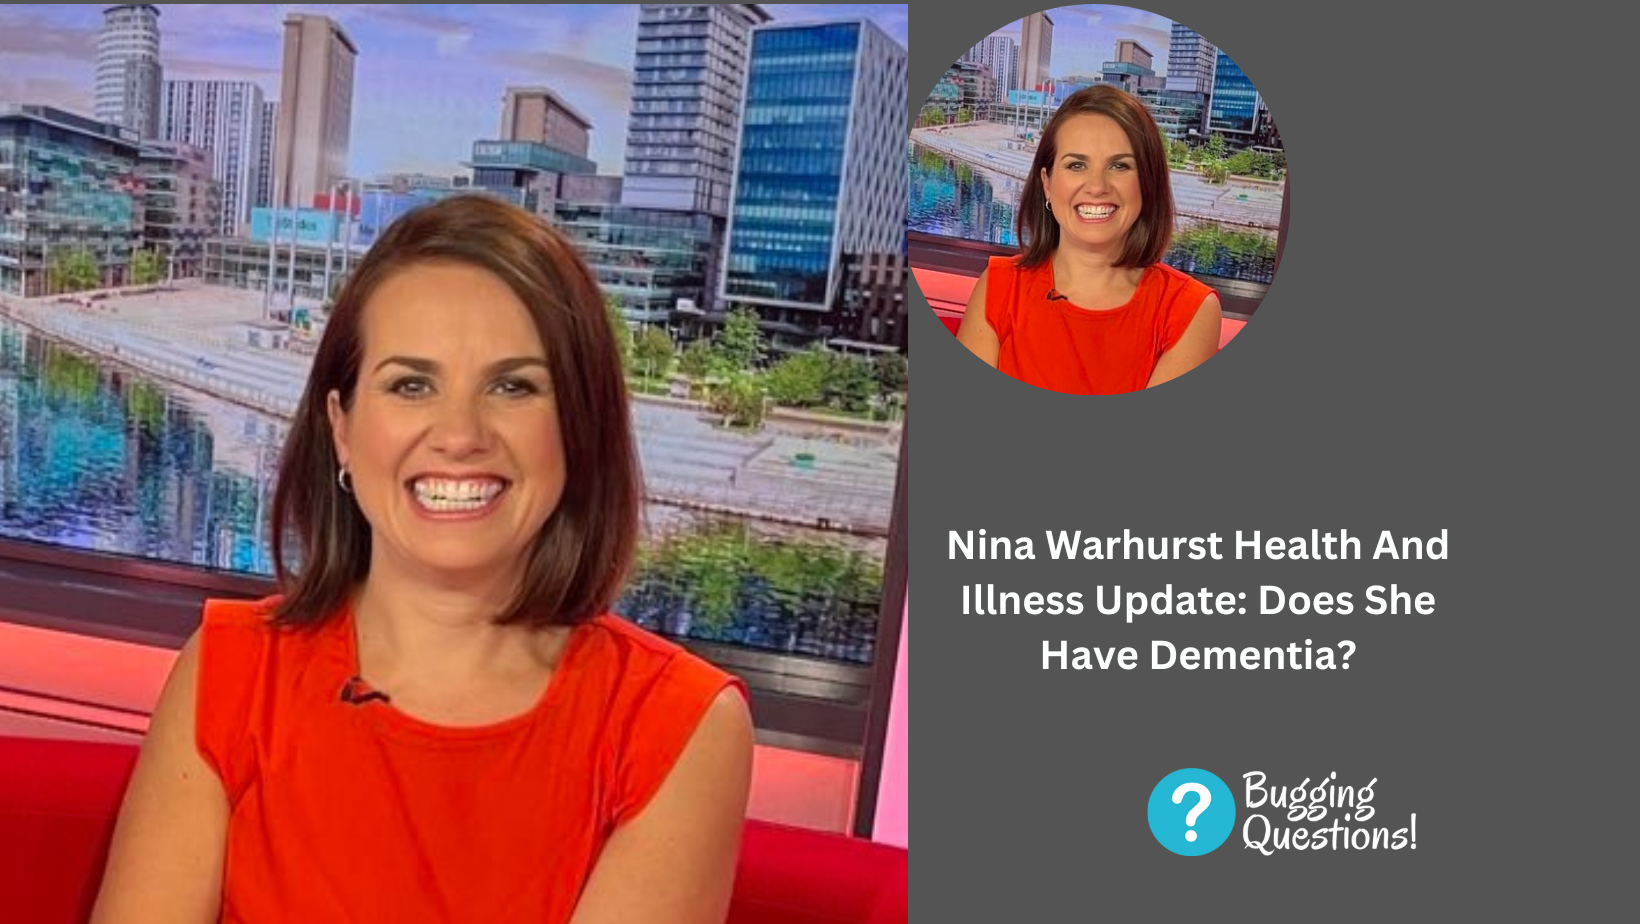 Nina Warhurst Health And Illness Update: Does She Have Dementia?